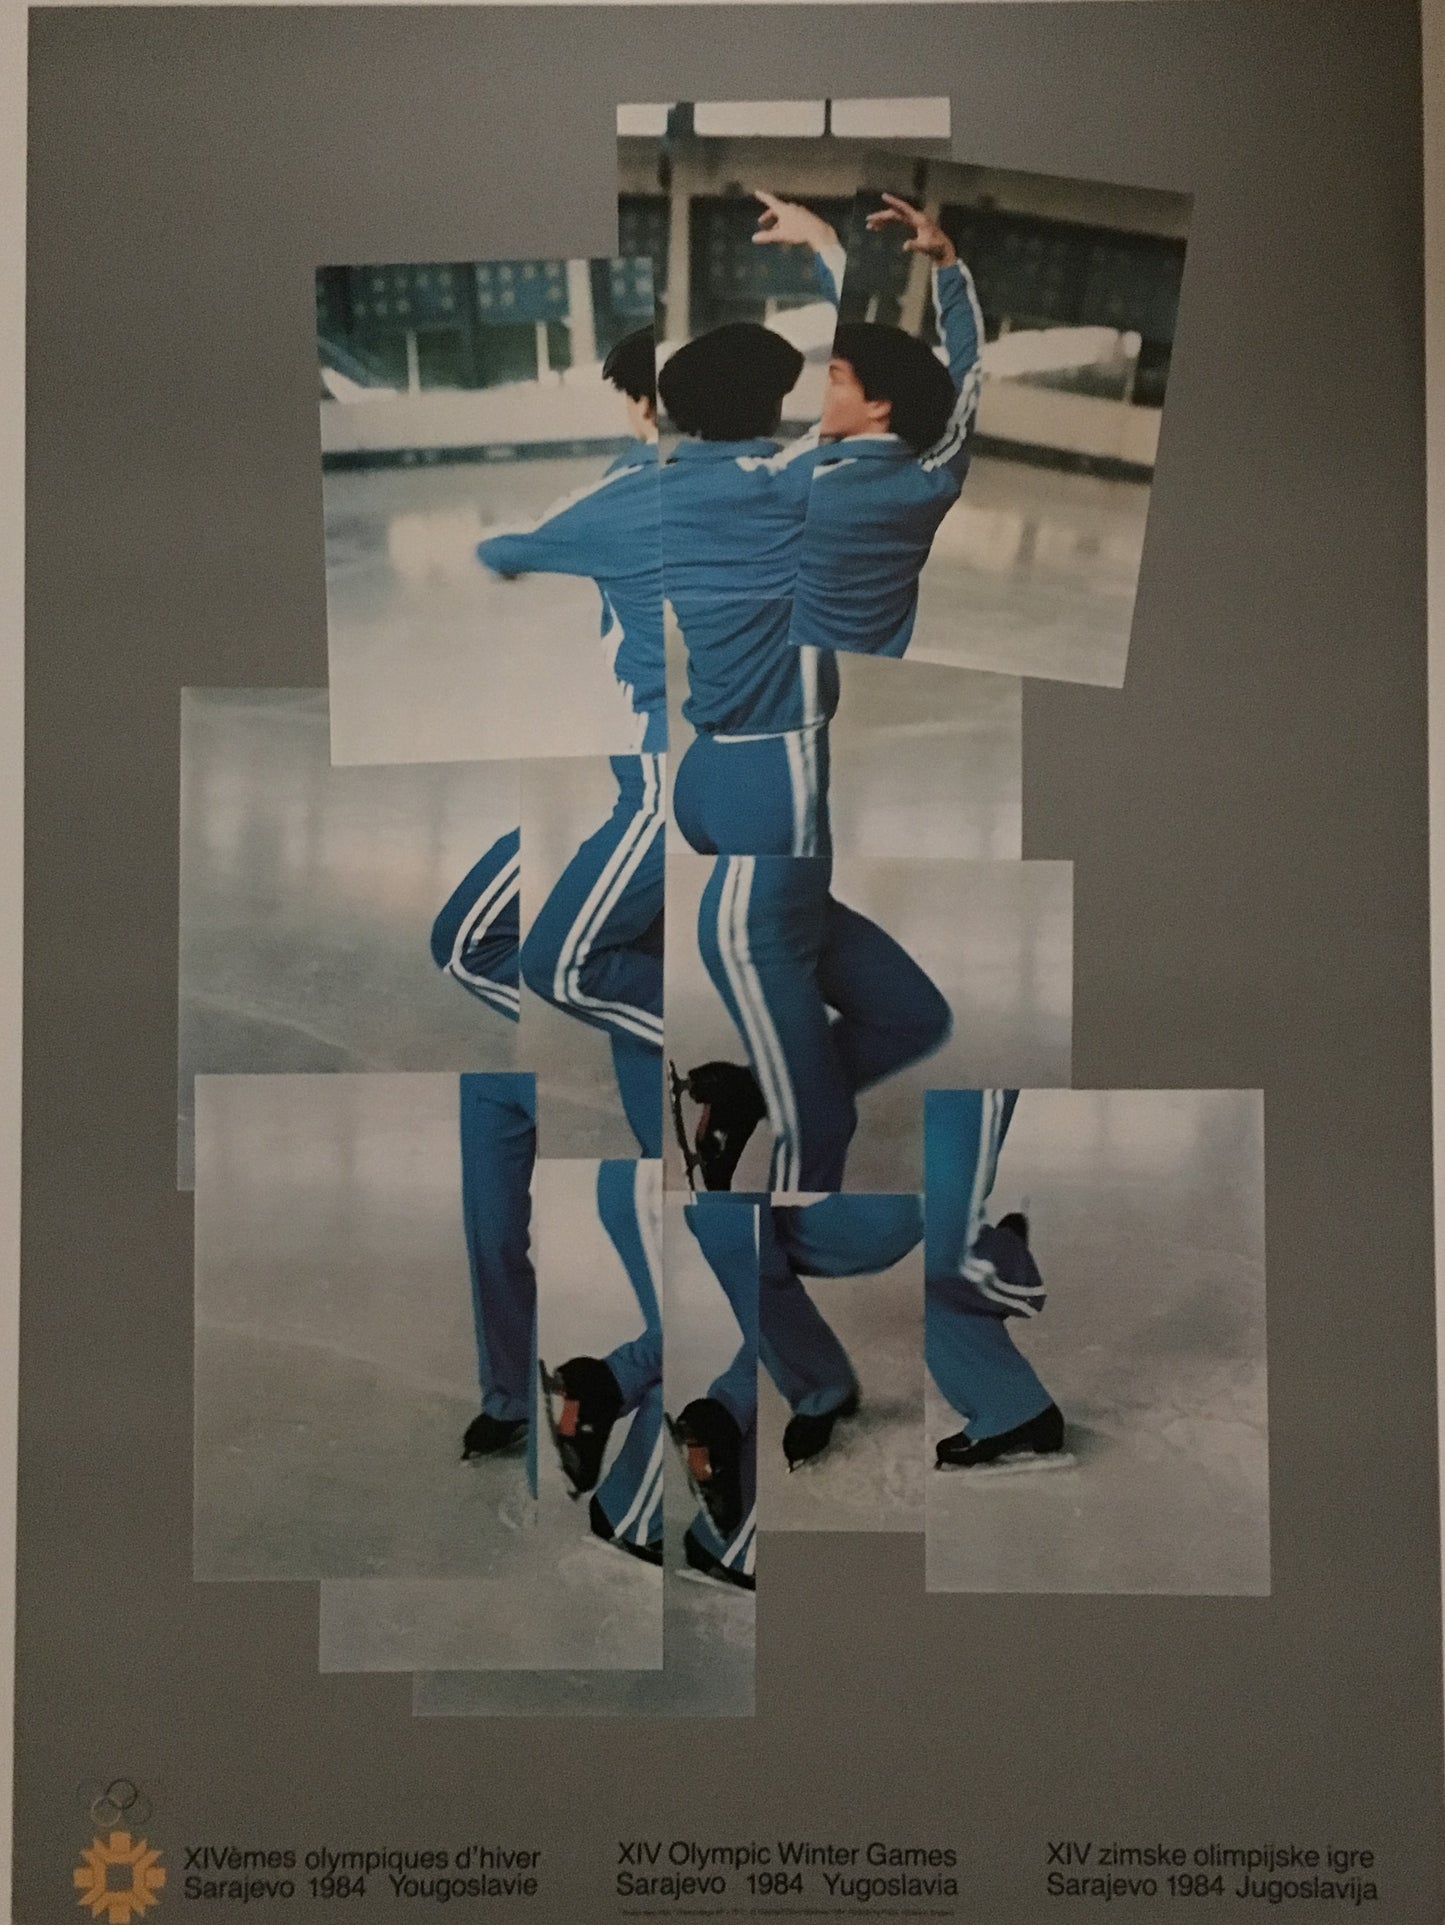 David Hockney, XIV Olympic Winter Games, 1984, The Skater (24.75w x 33.5t)